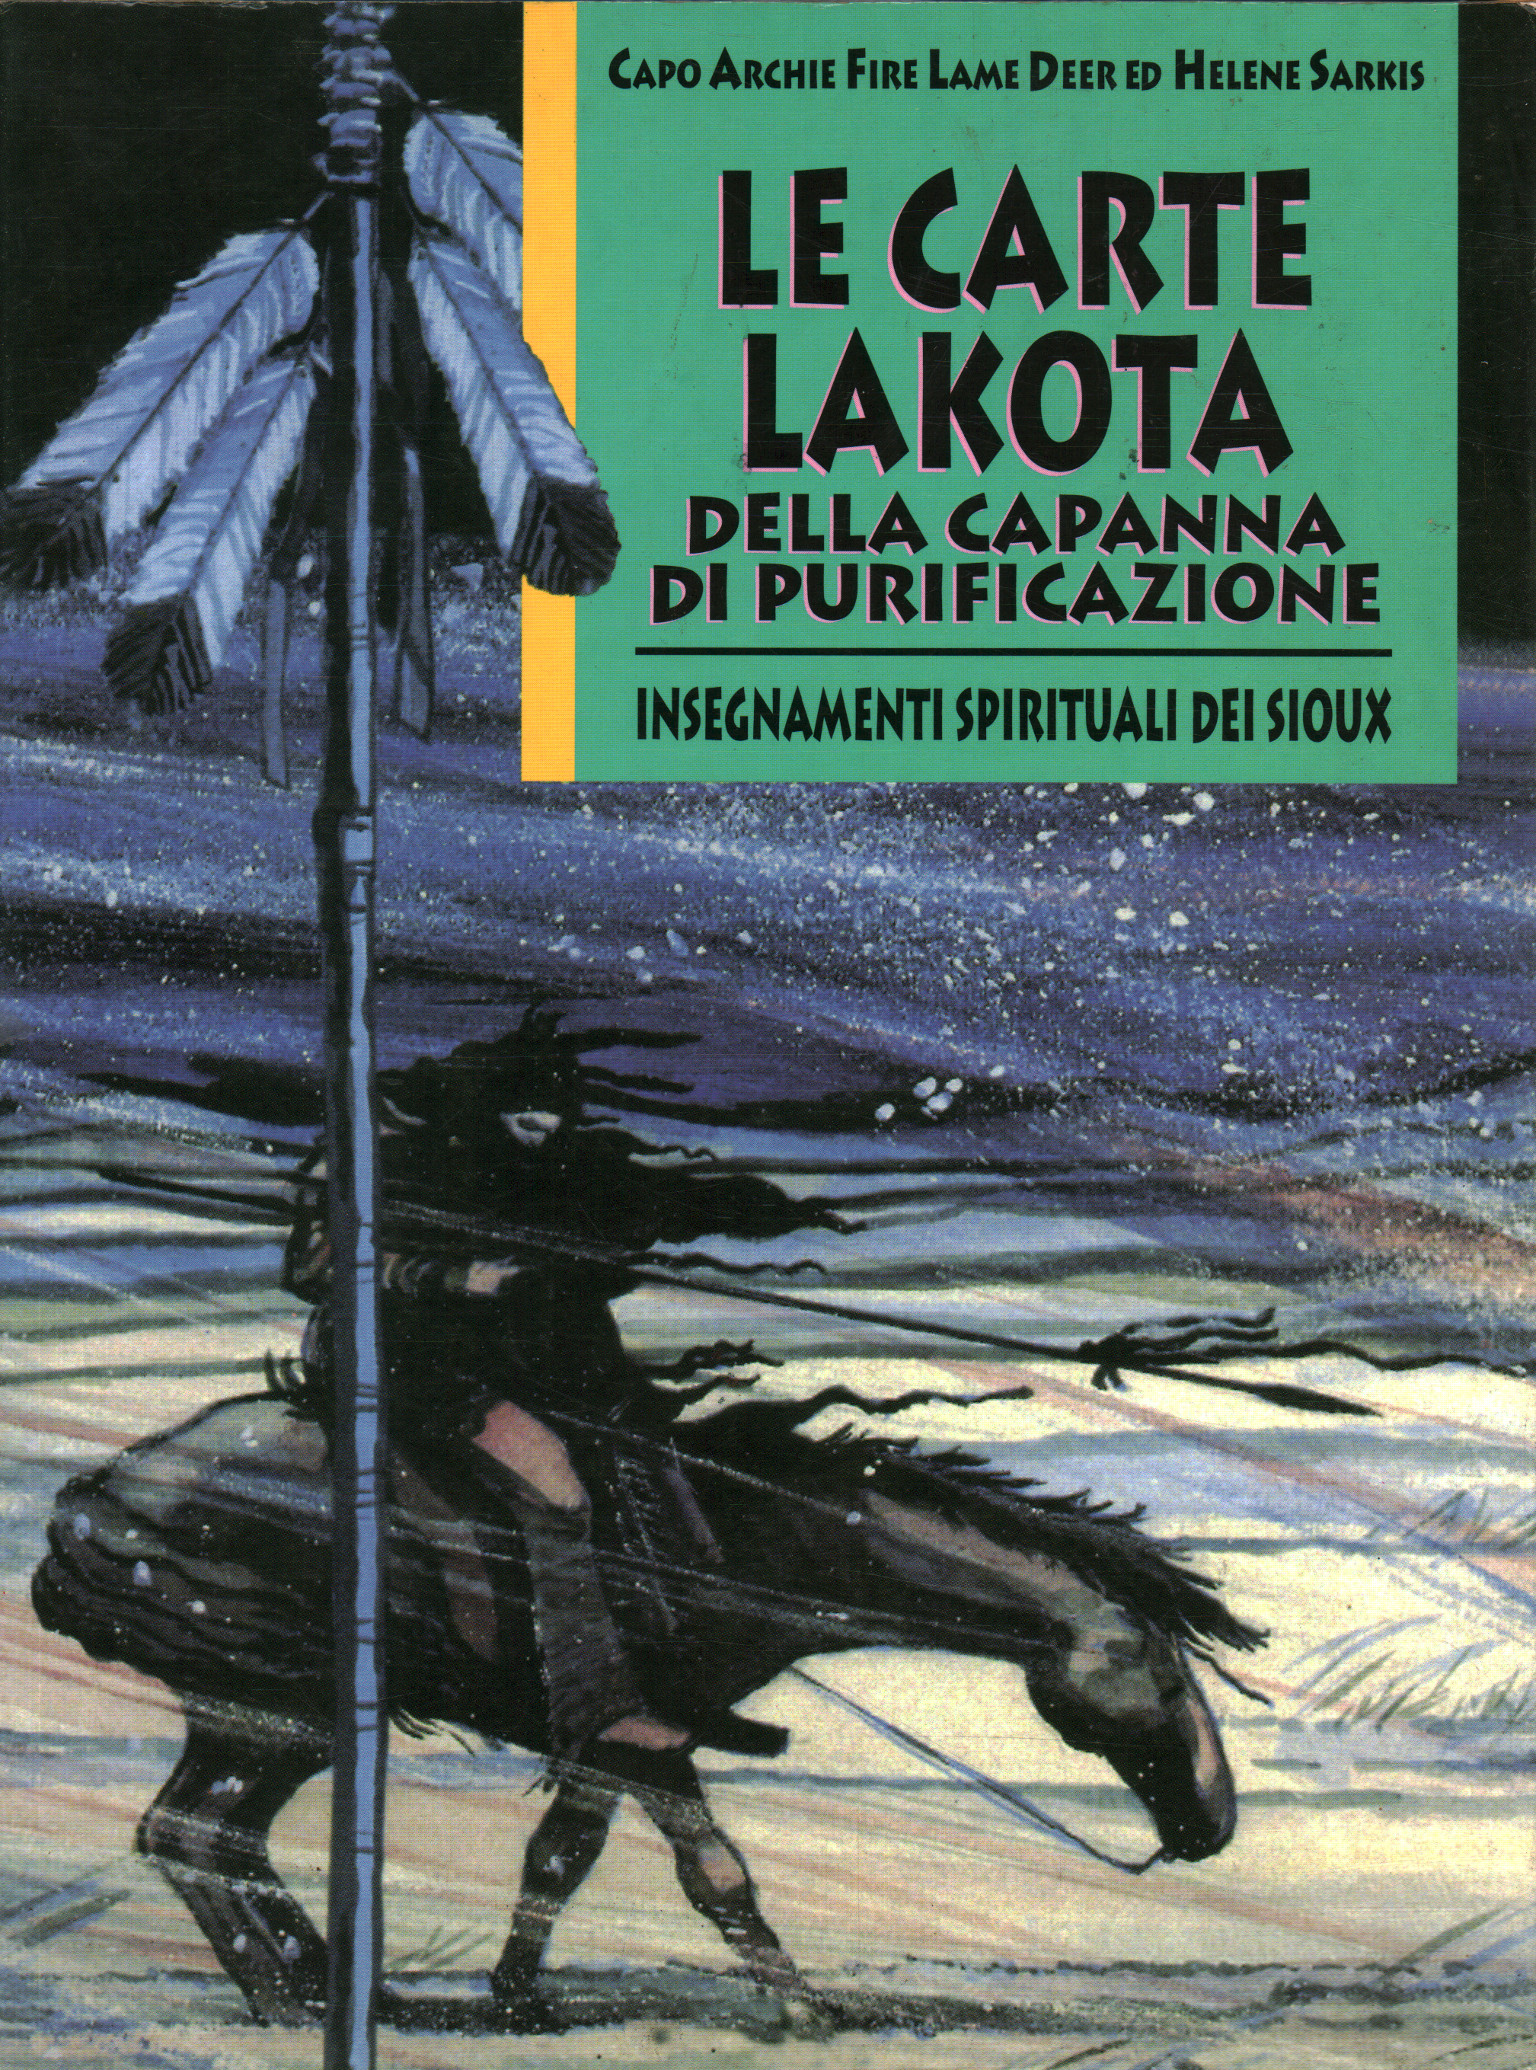 The Lakota cards of purif's hut